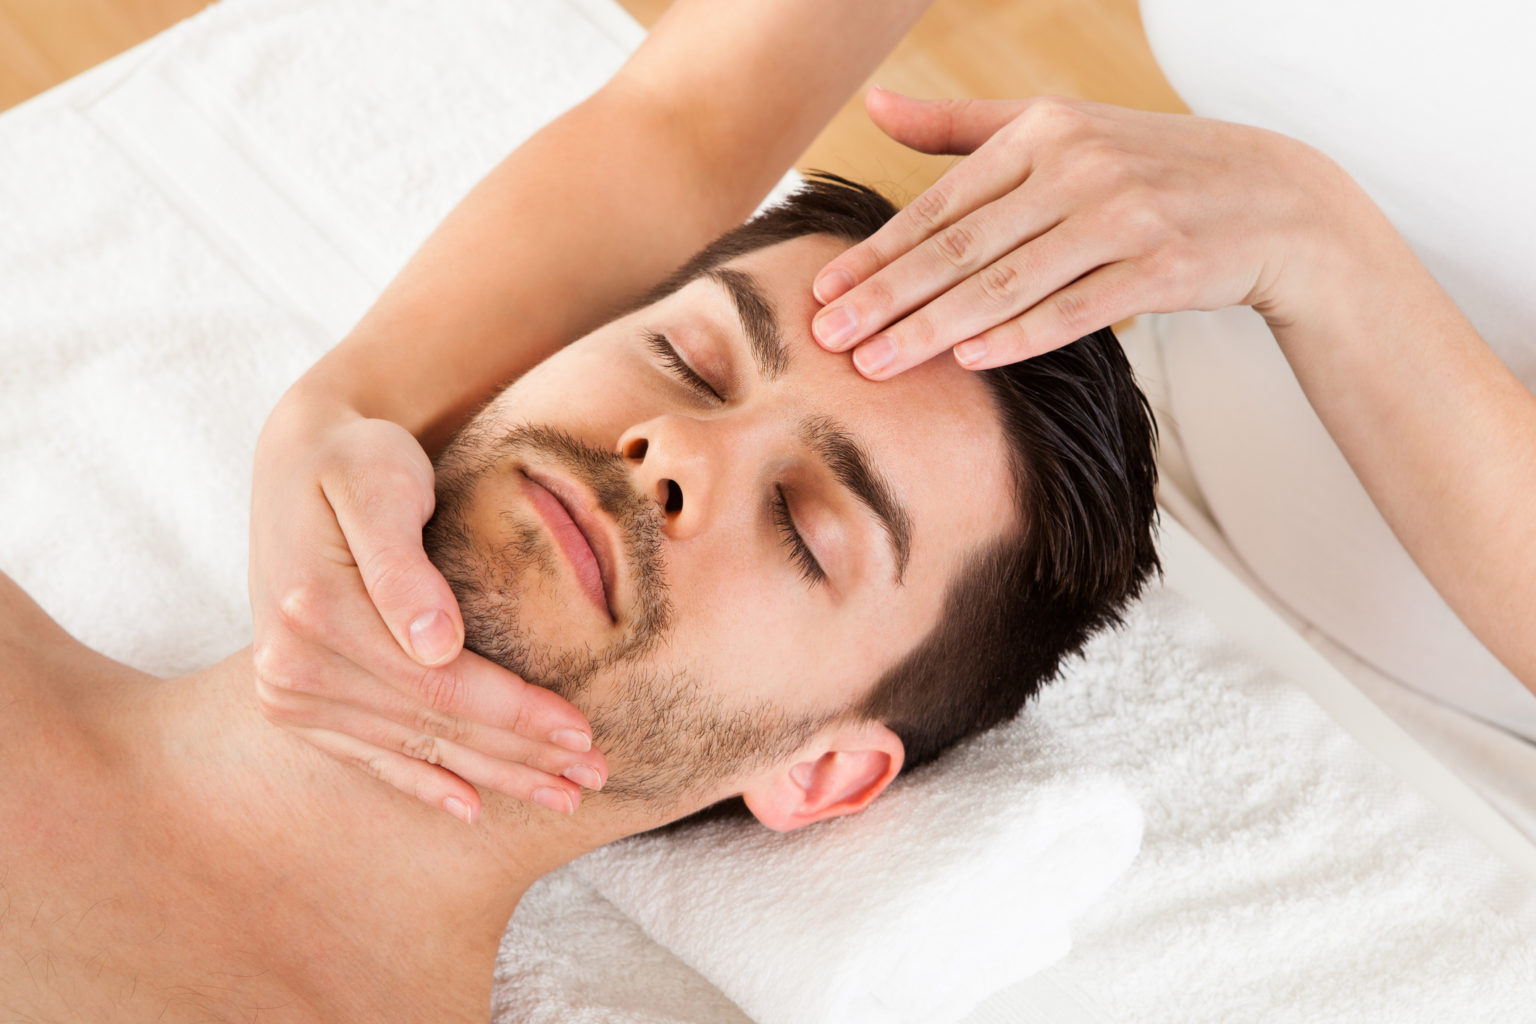 best reflexology massage services in bend or